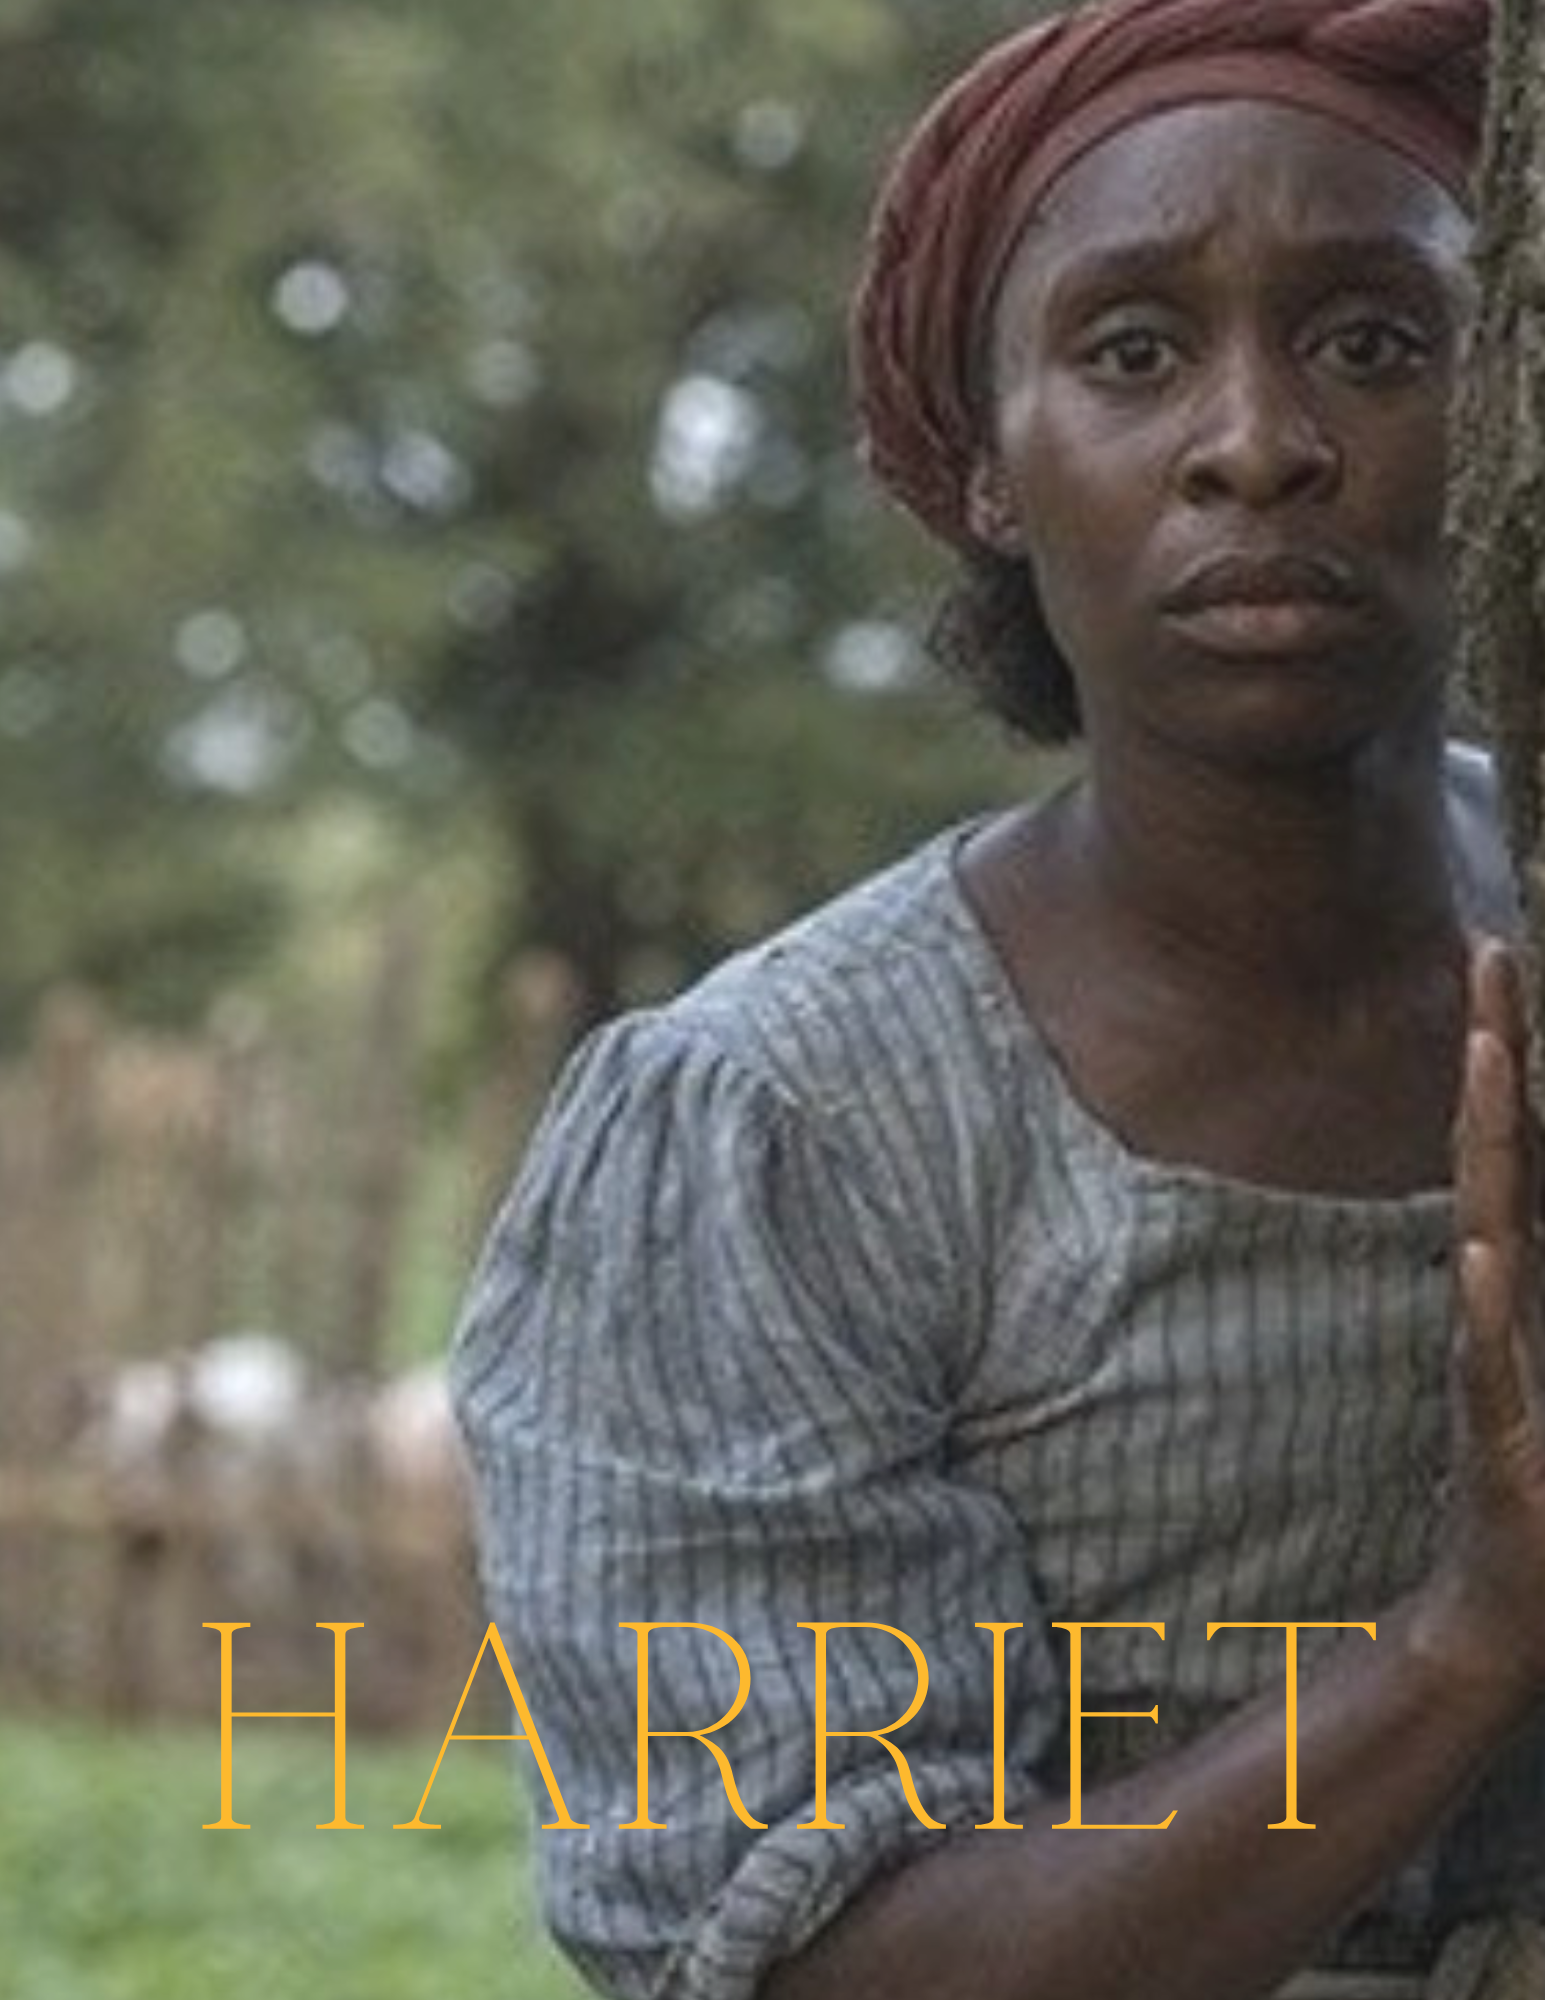 Black woman Harriet Tubman hiding behind a tree looking scared